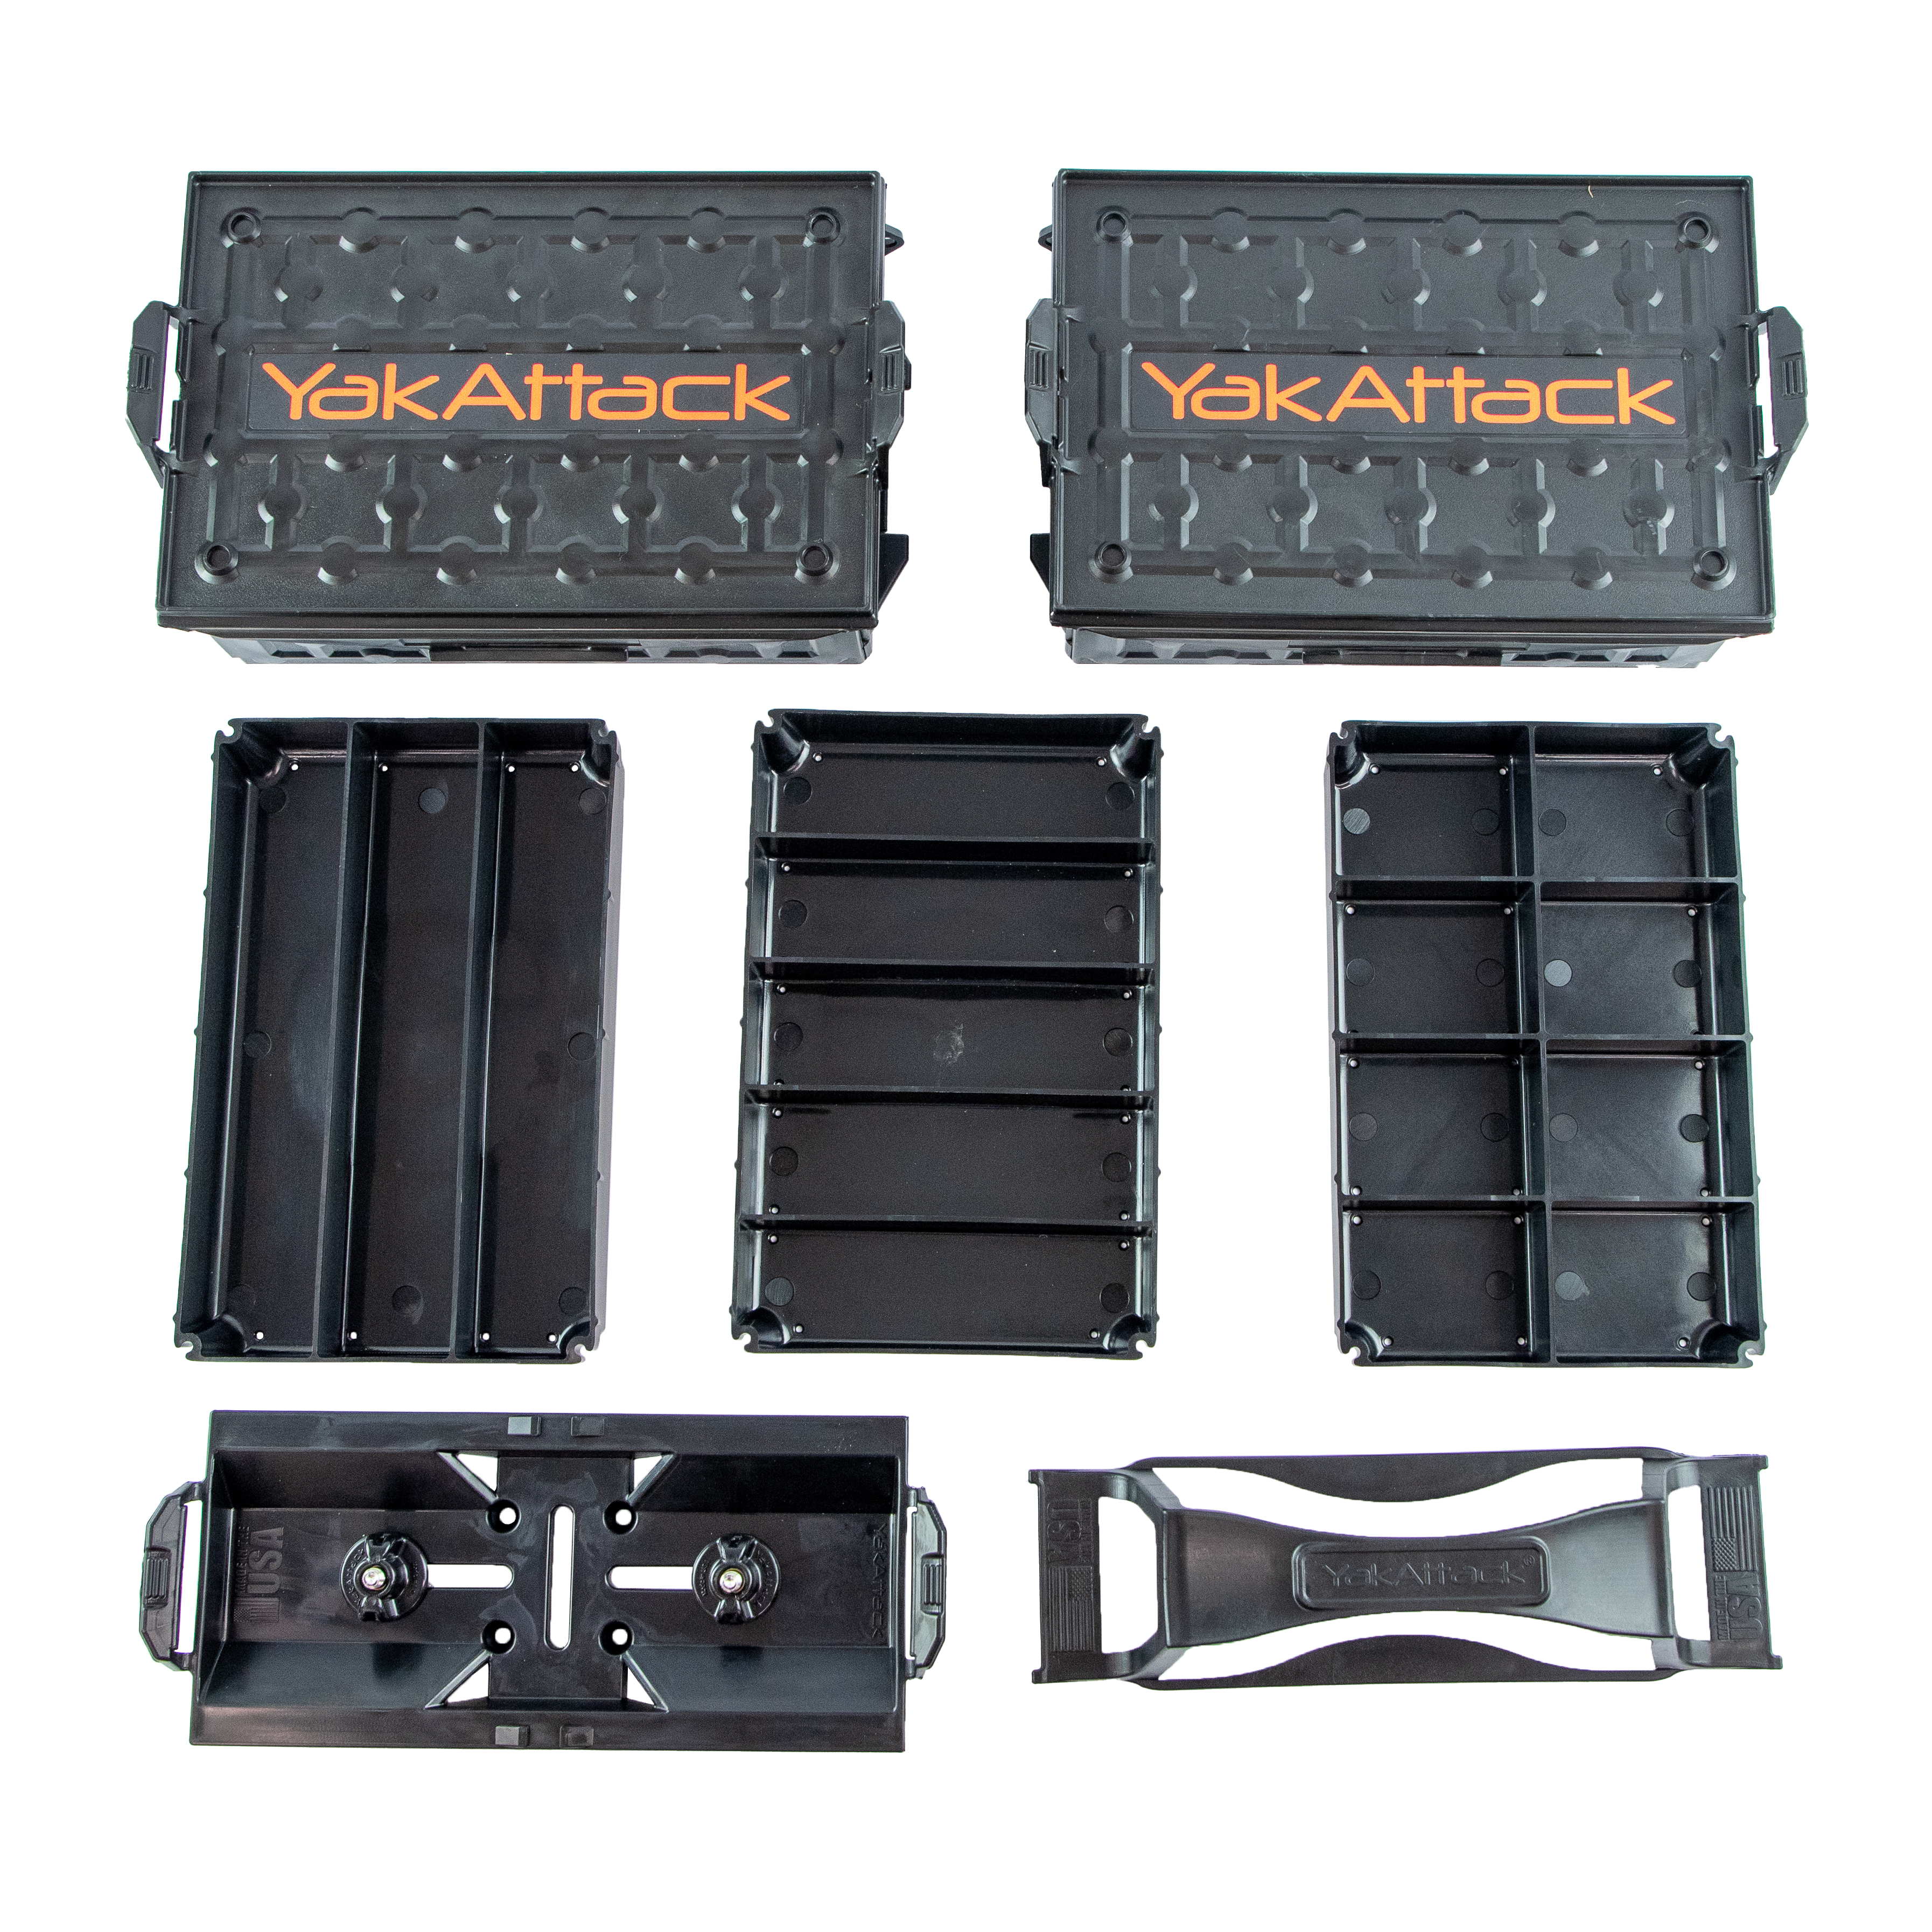 fully loaded TracPak combo kit